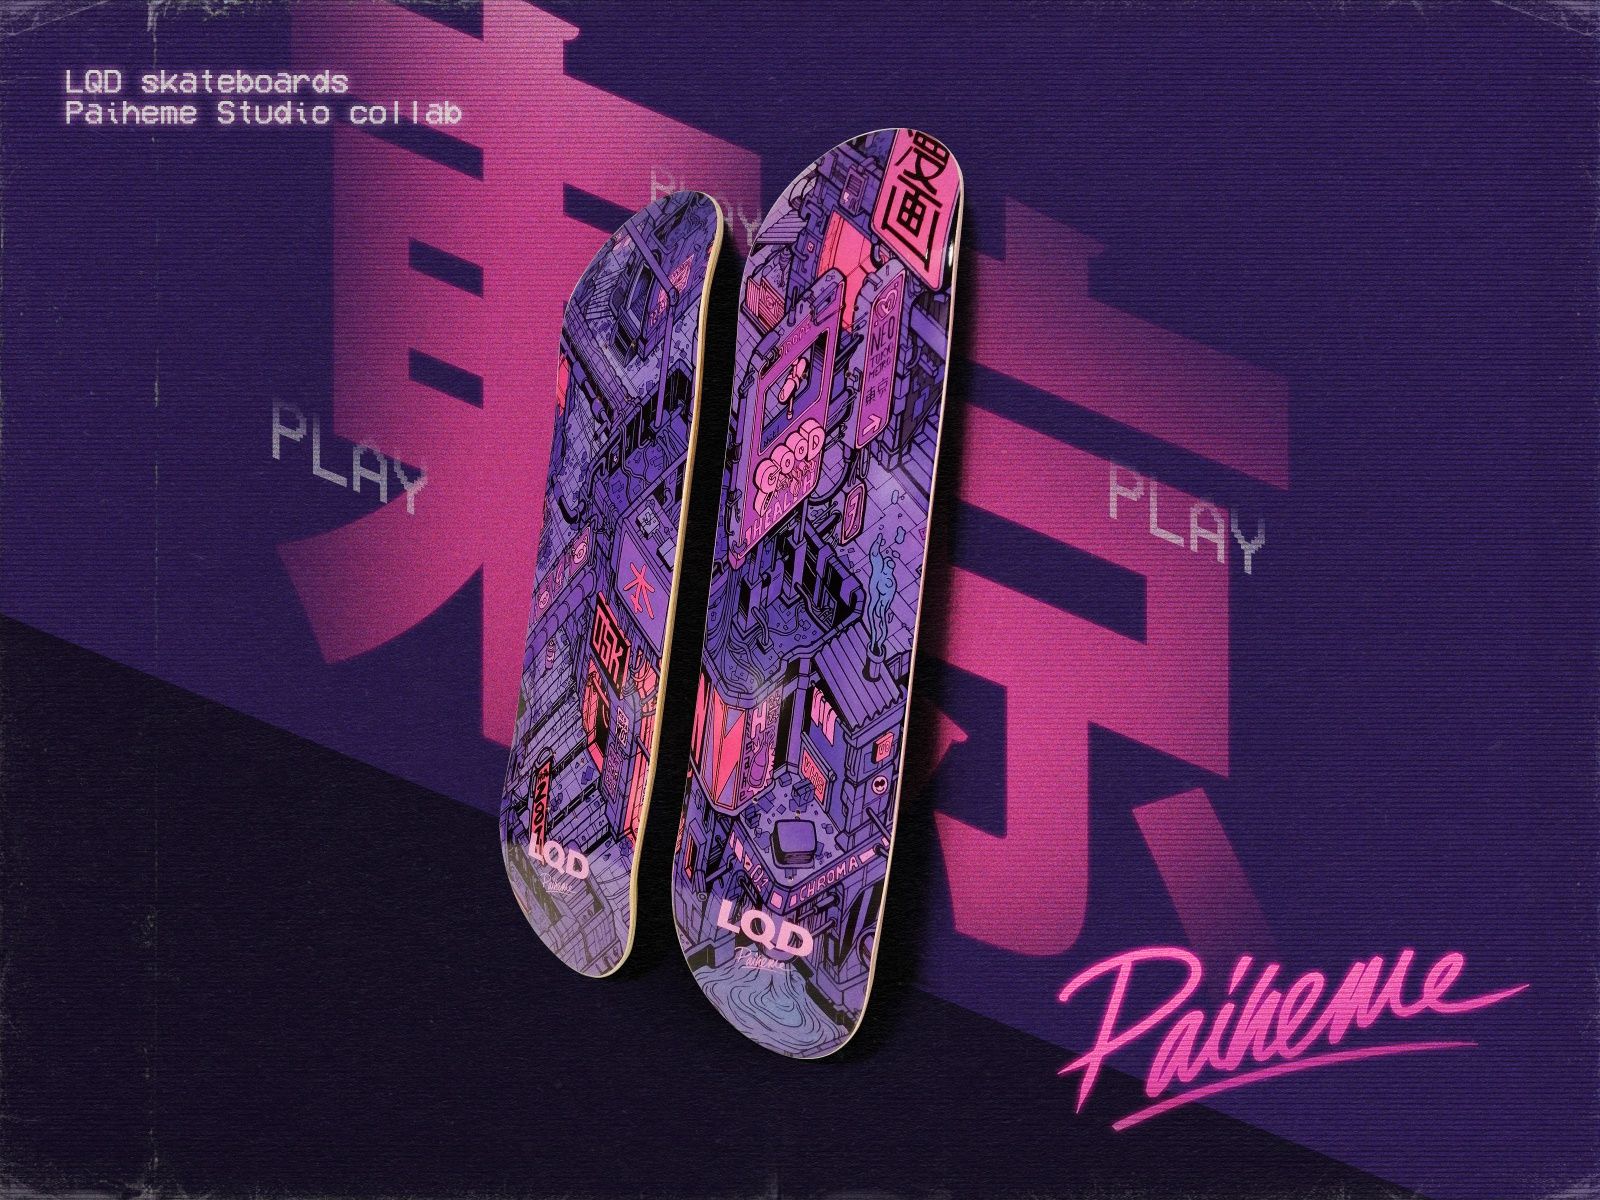 LQD Skateboards x Paiheme Studio Collab